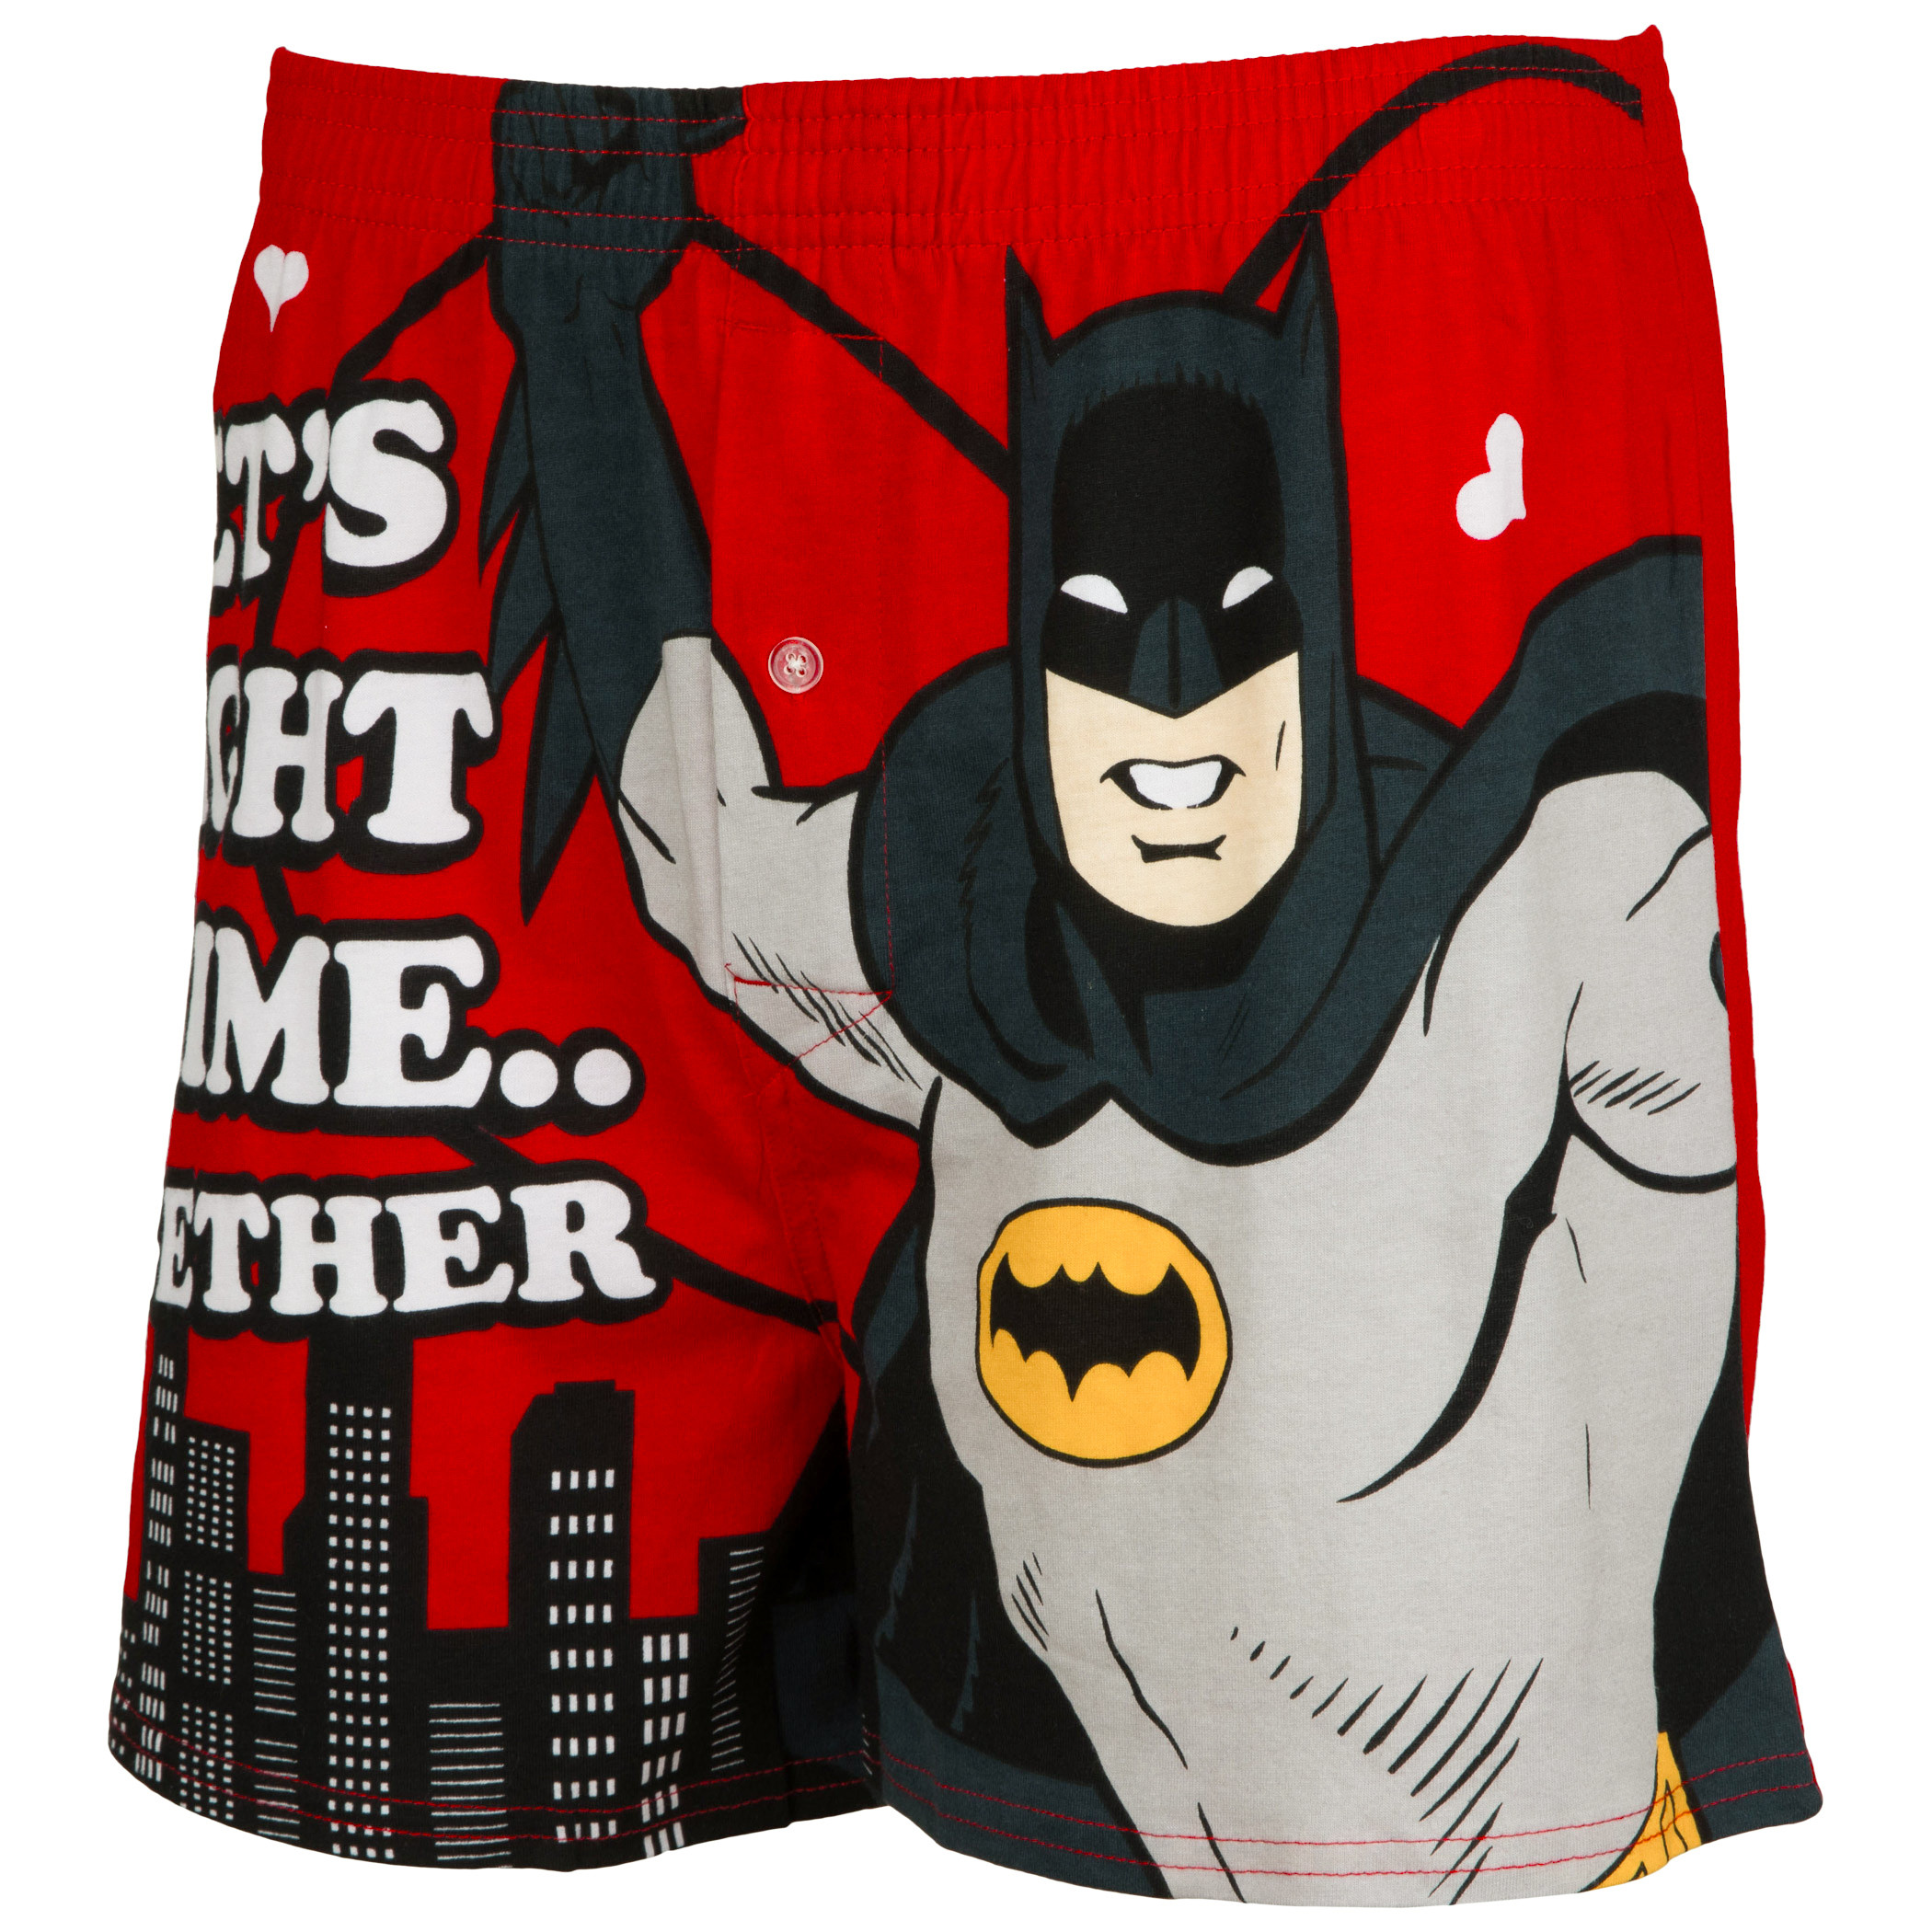 Superhero Underwear with Wonder Woman, Batman, Superman Logos and